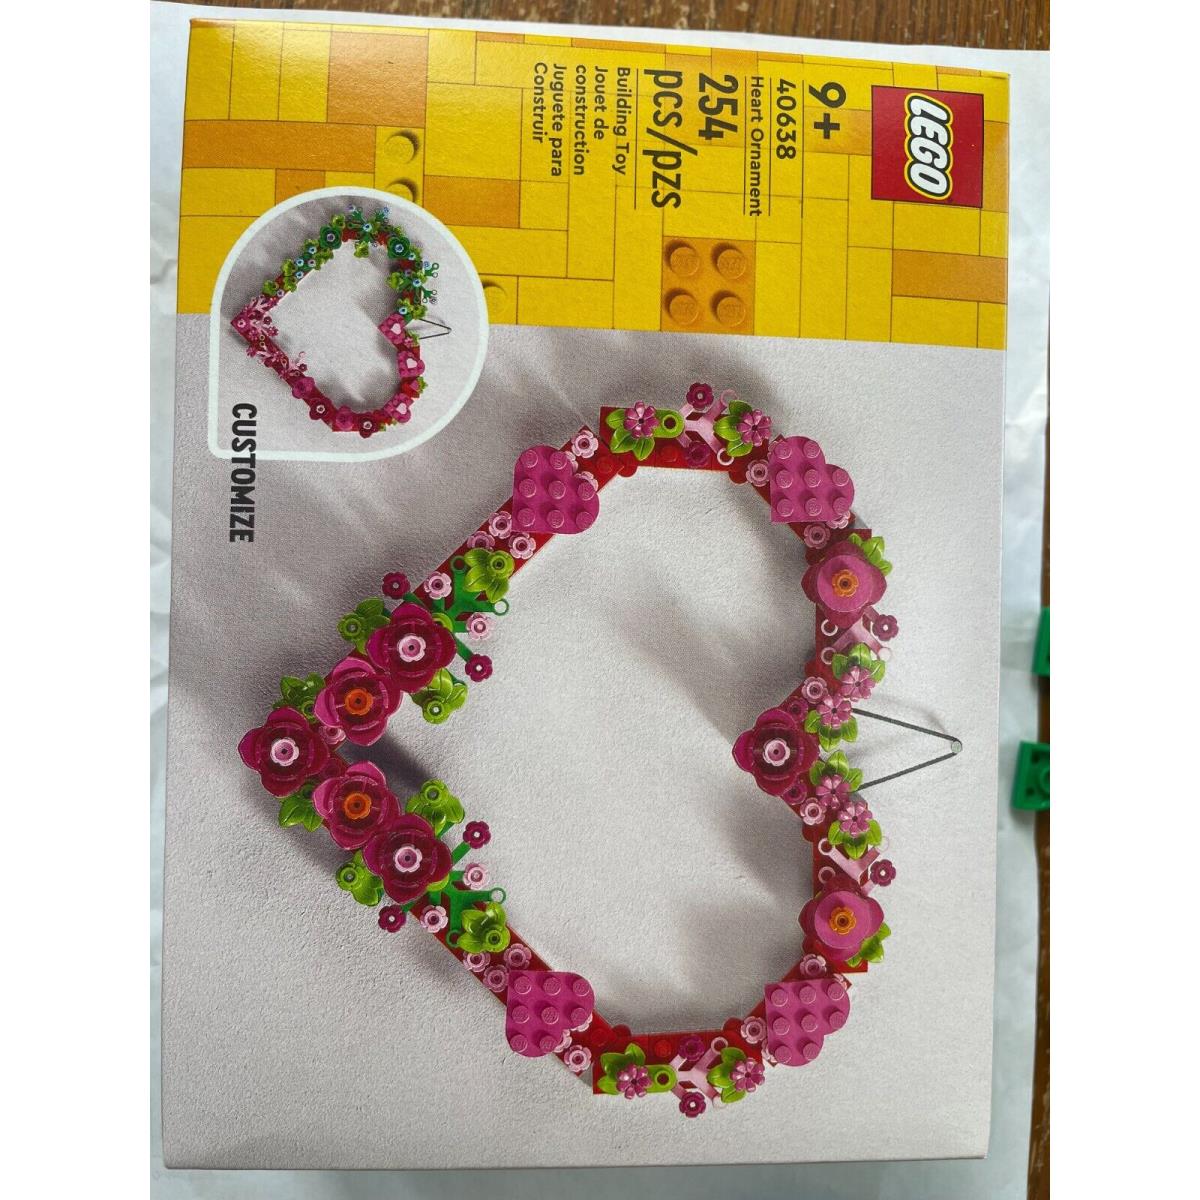 Lego- New-heart Ornament 40638 Set Kit Flower/quick Ship/boxed